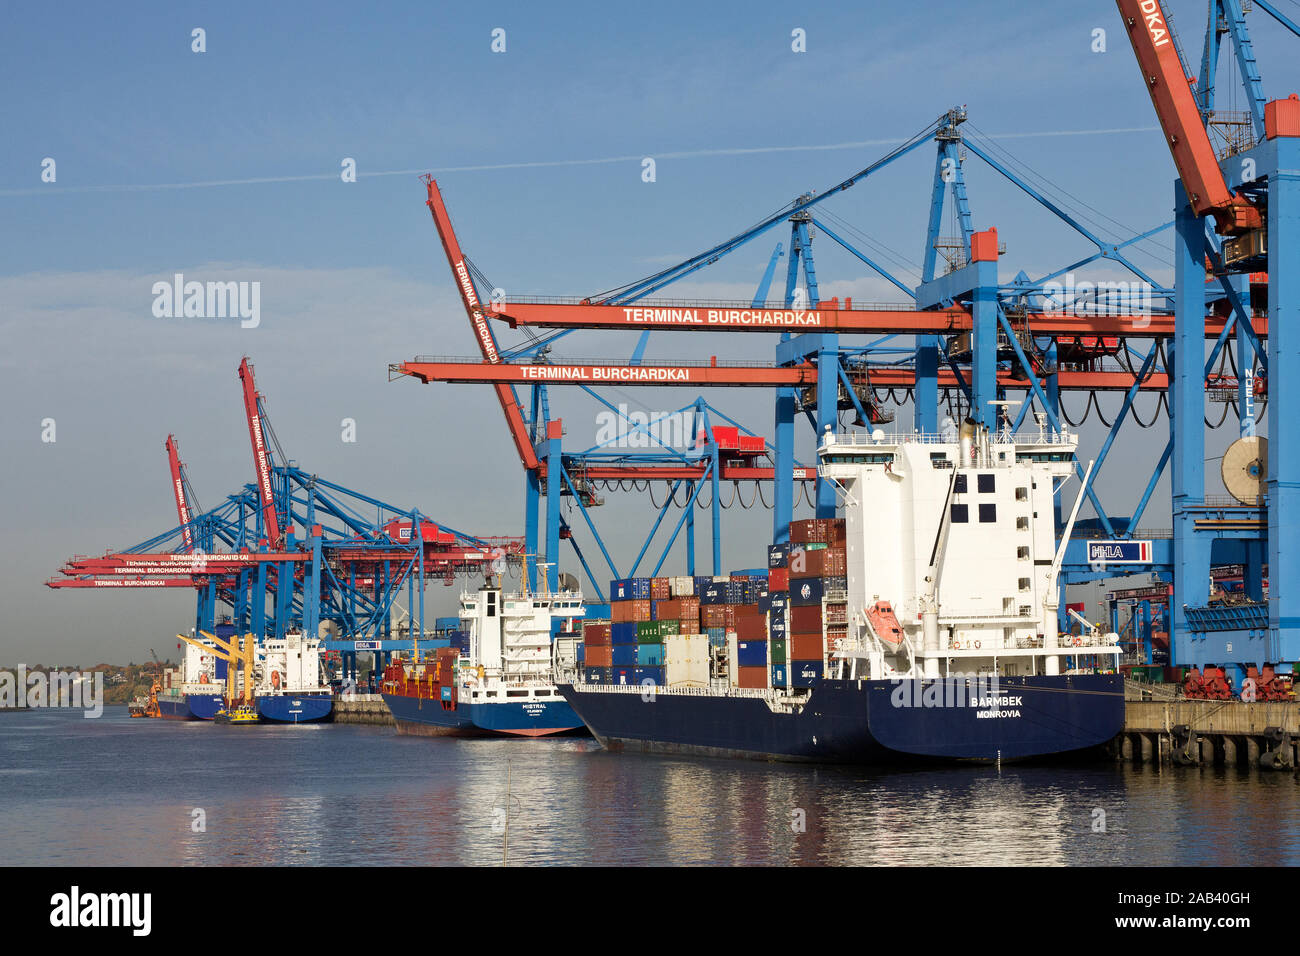 Containerschiffe am Containerterminal Burchardkai im Hamburger Hafen |Container ships at the container terminal in the Port of Hamburg| Stock Photo